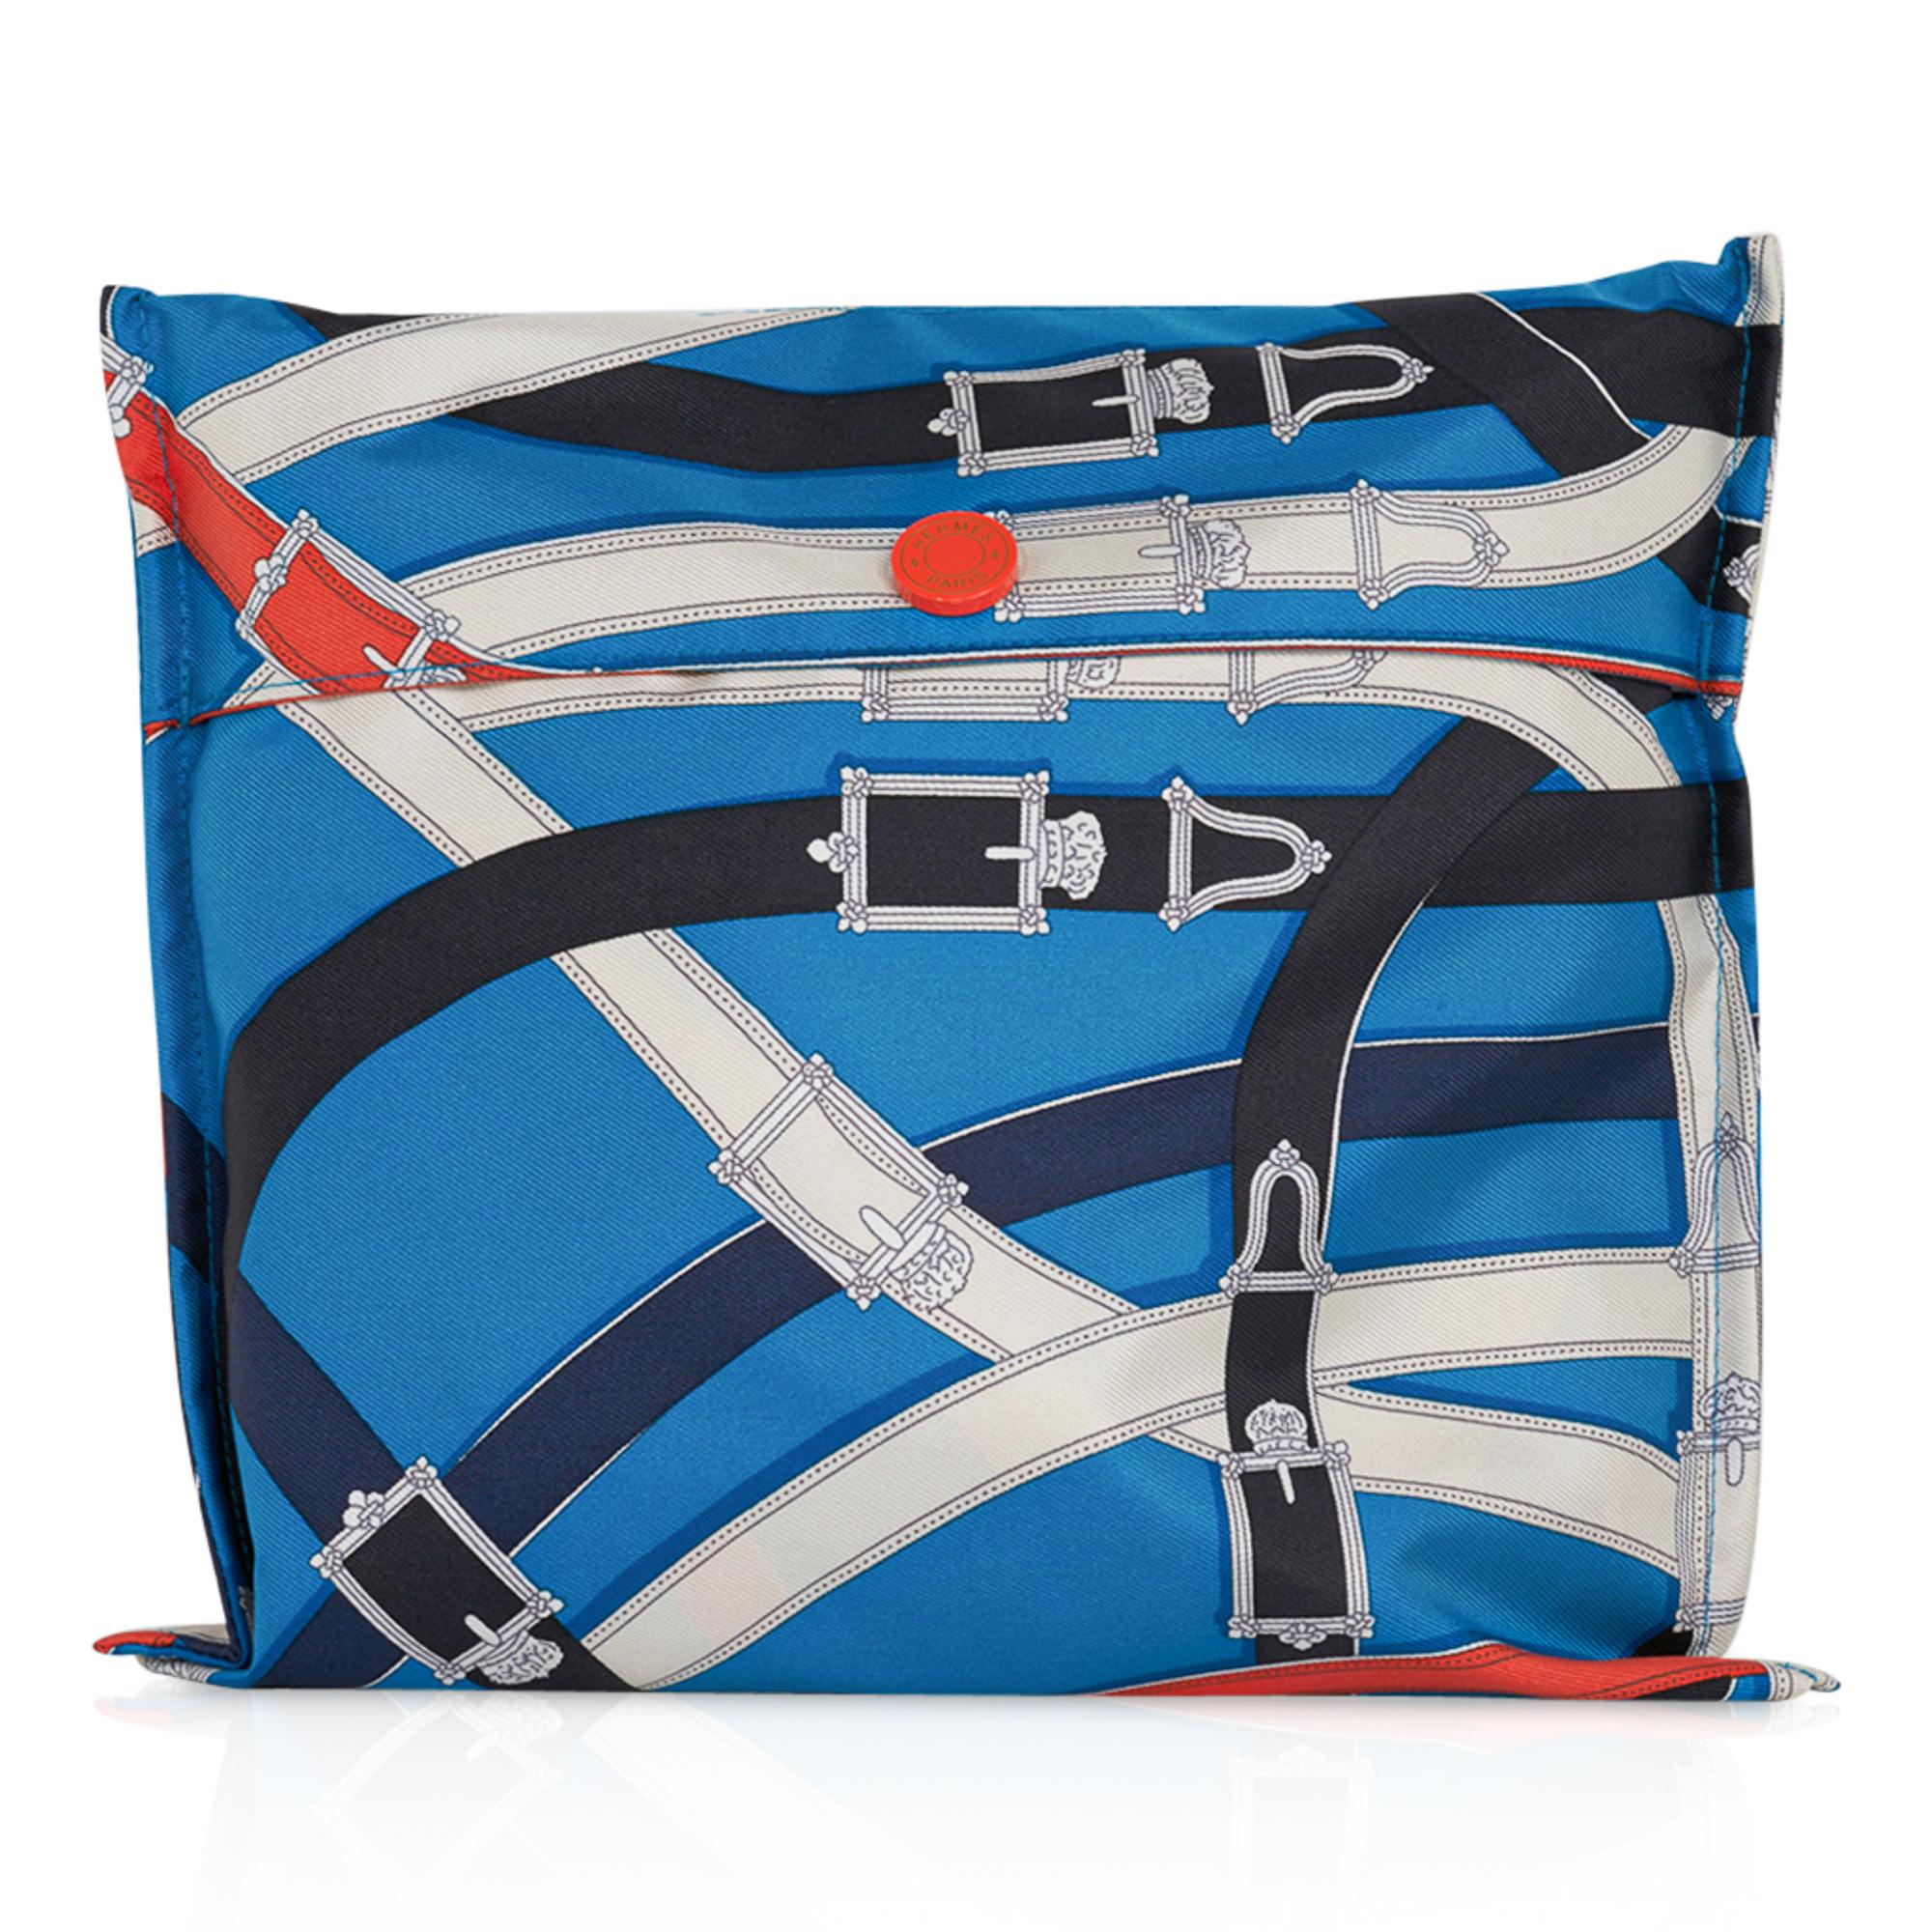 Hermes Bag Airsilk Duffle Cavalcadour 44 Blue Silk Limited Edition New 2